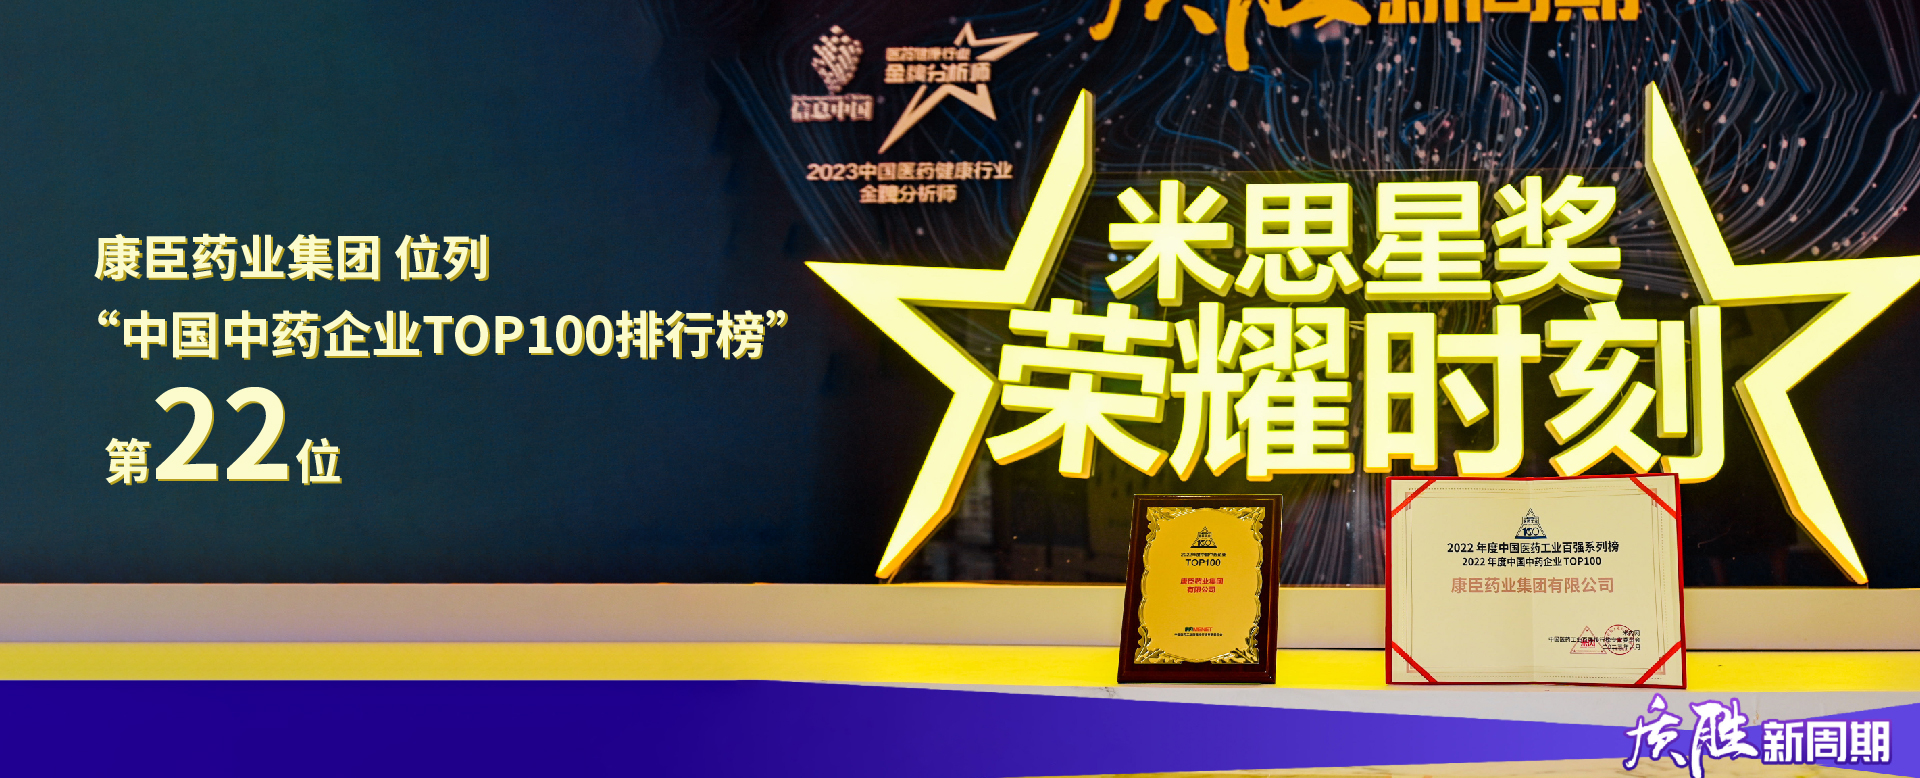 Bwin体育亚洲官网集团位列2022年度“中国中药企业TOP100排行榜”第22位。